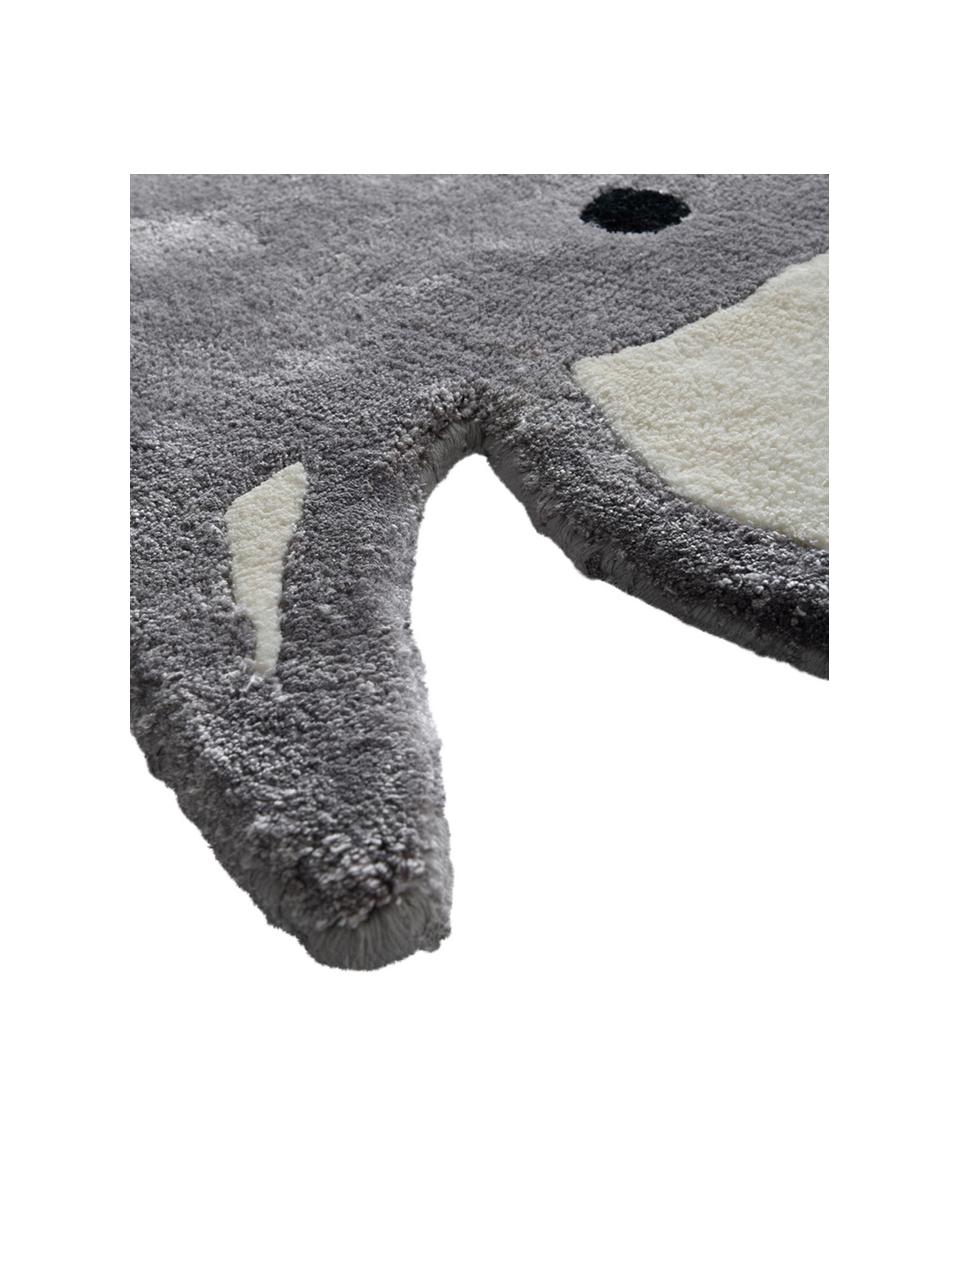 Viscose vloerkleed Ellie Elephant, 100% viscose, 4600 g/m², Grijs, zwart, wit, B 100 x L 180 cm (maat S)